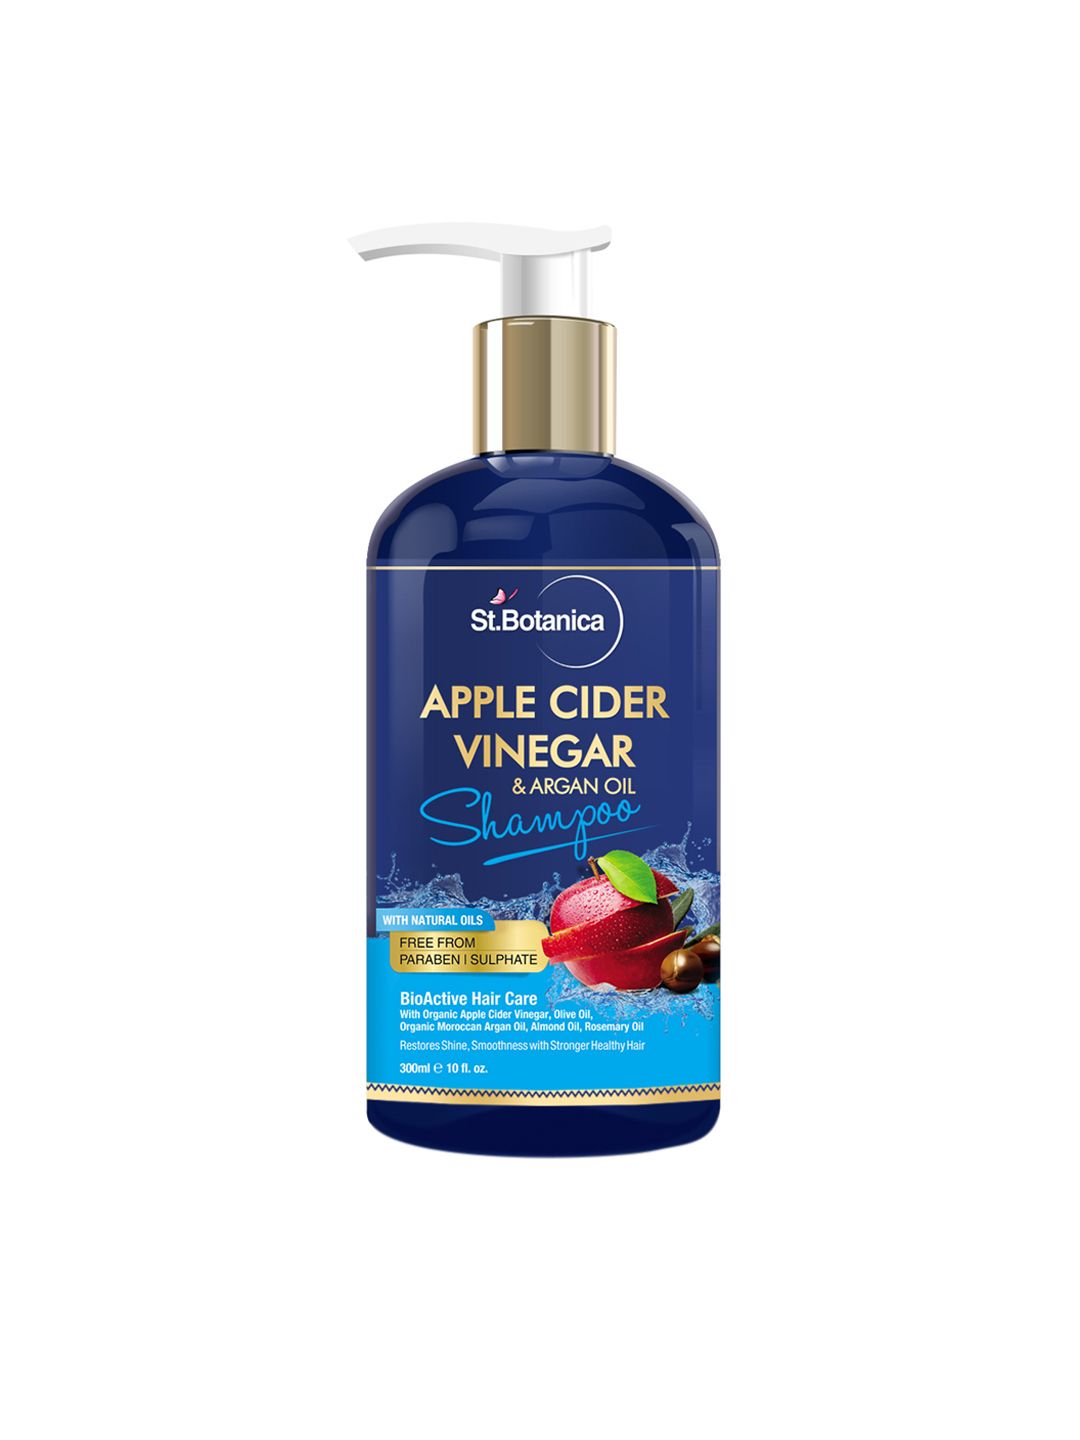 StBotanica Apple Cider Vinegar Hair Shampoo Price in India